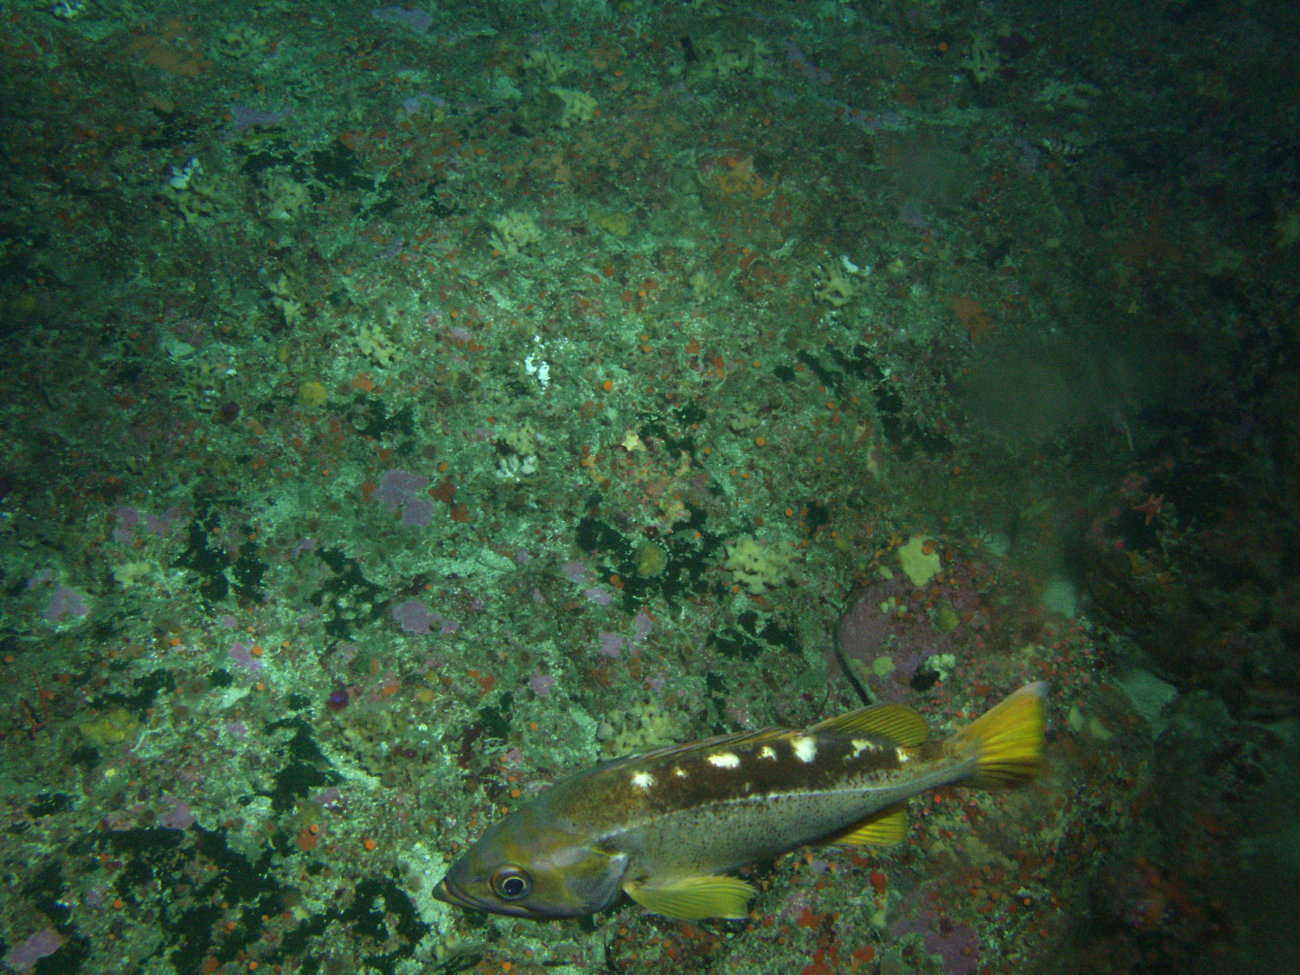 Yellowtail Rockfish (Sebastes flavidus) on rocky reef habitatat 95 meters depth